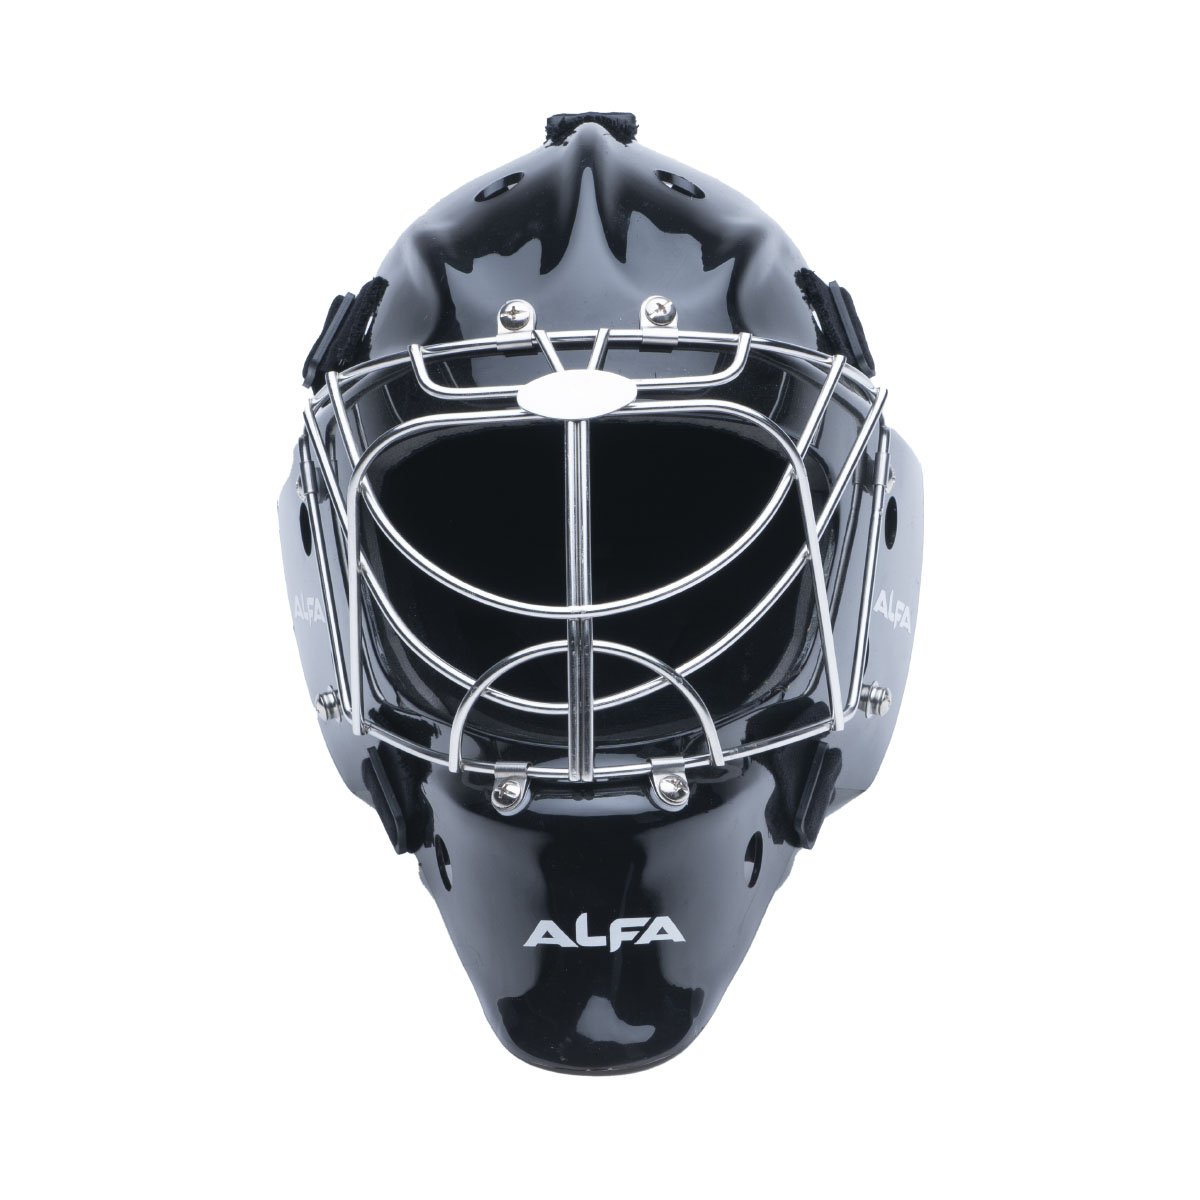 Alfa Hockey Helmet Imported Supplier Goalkeeper Kit Manufacturer India